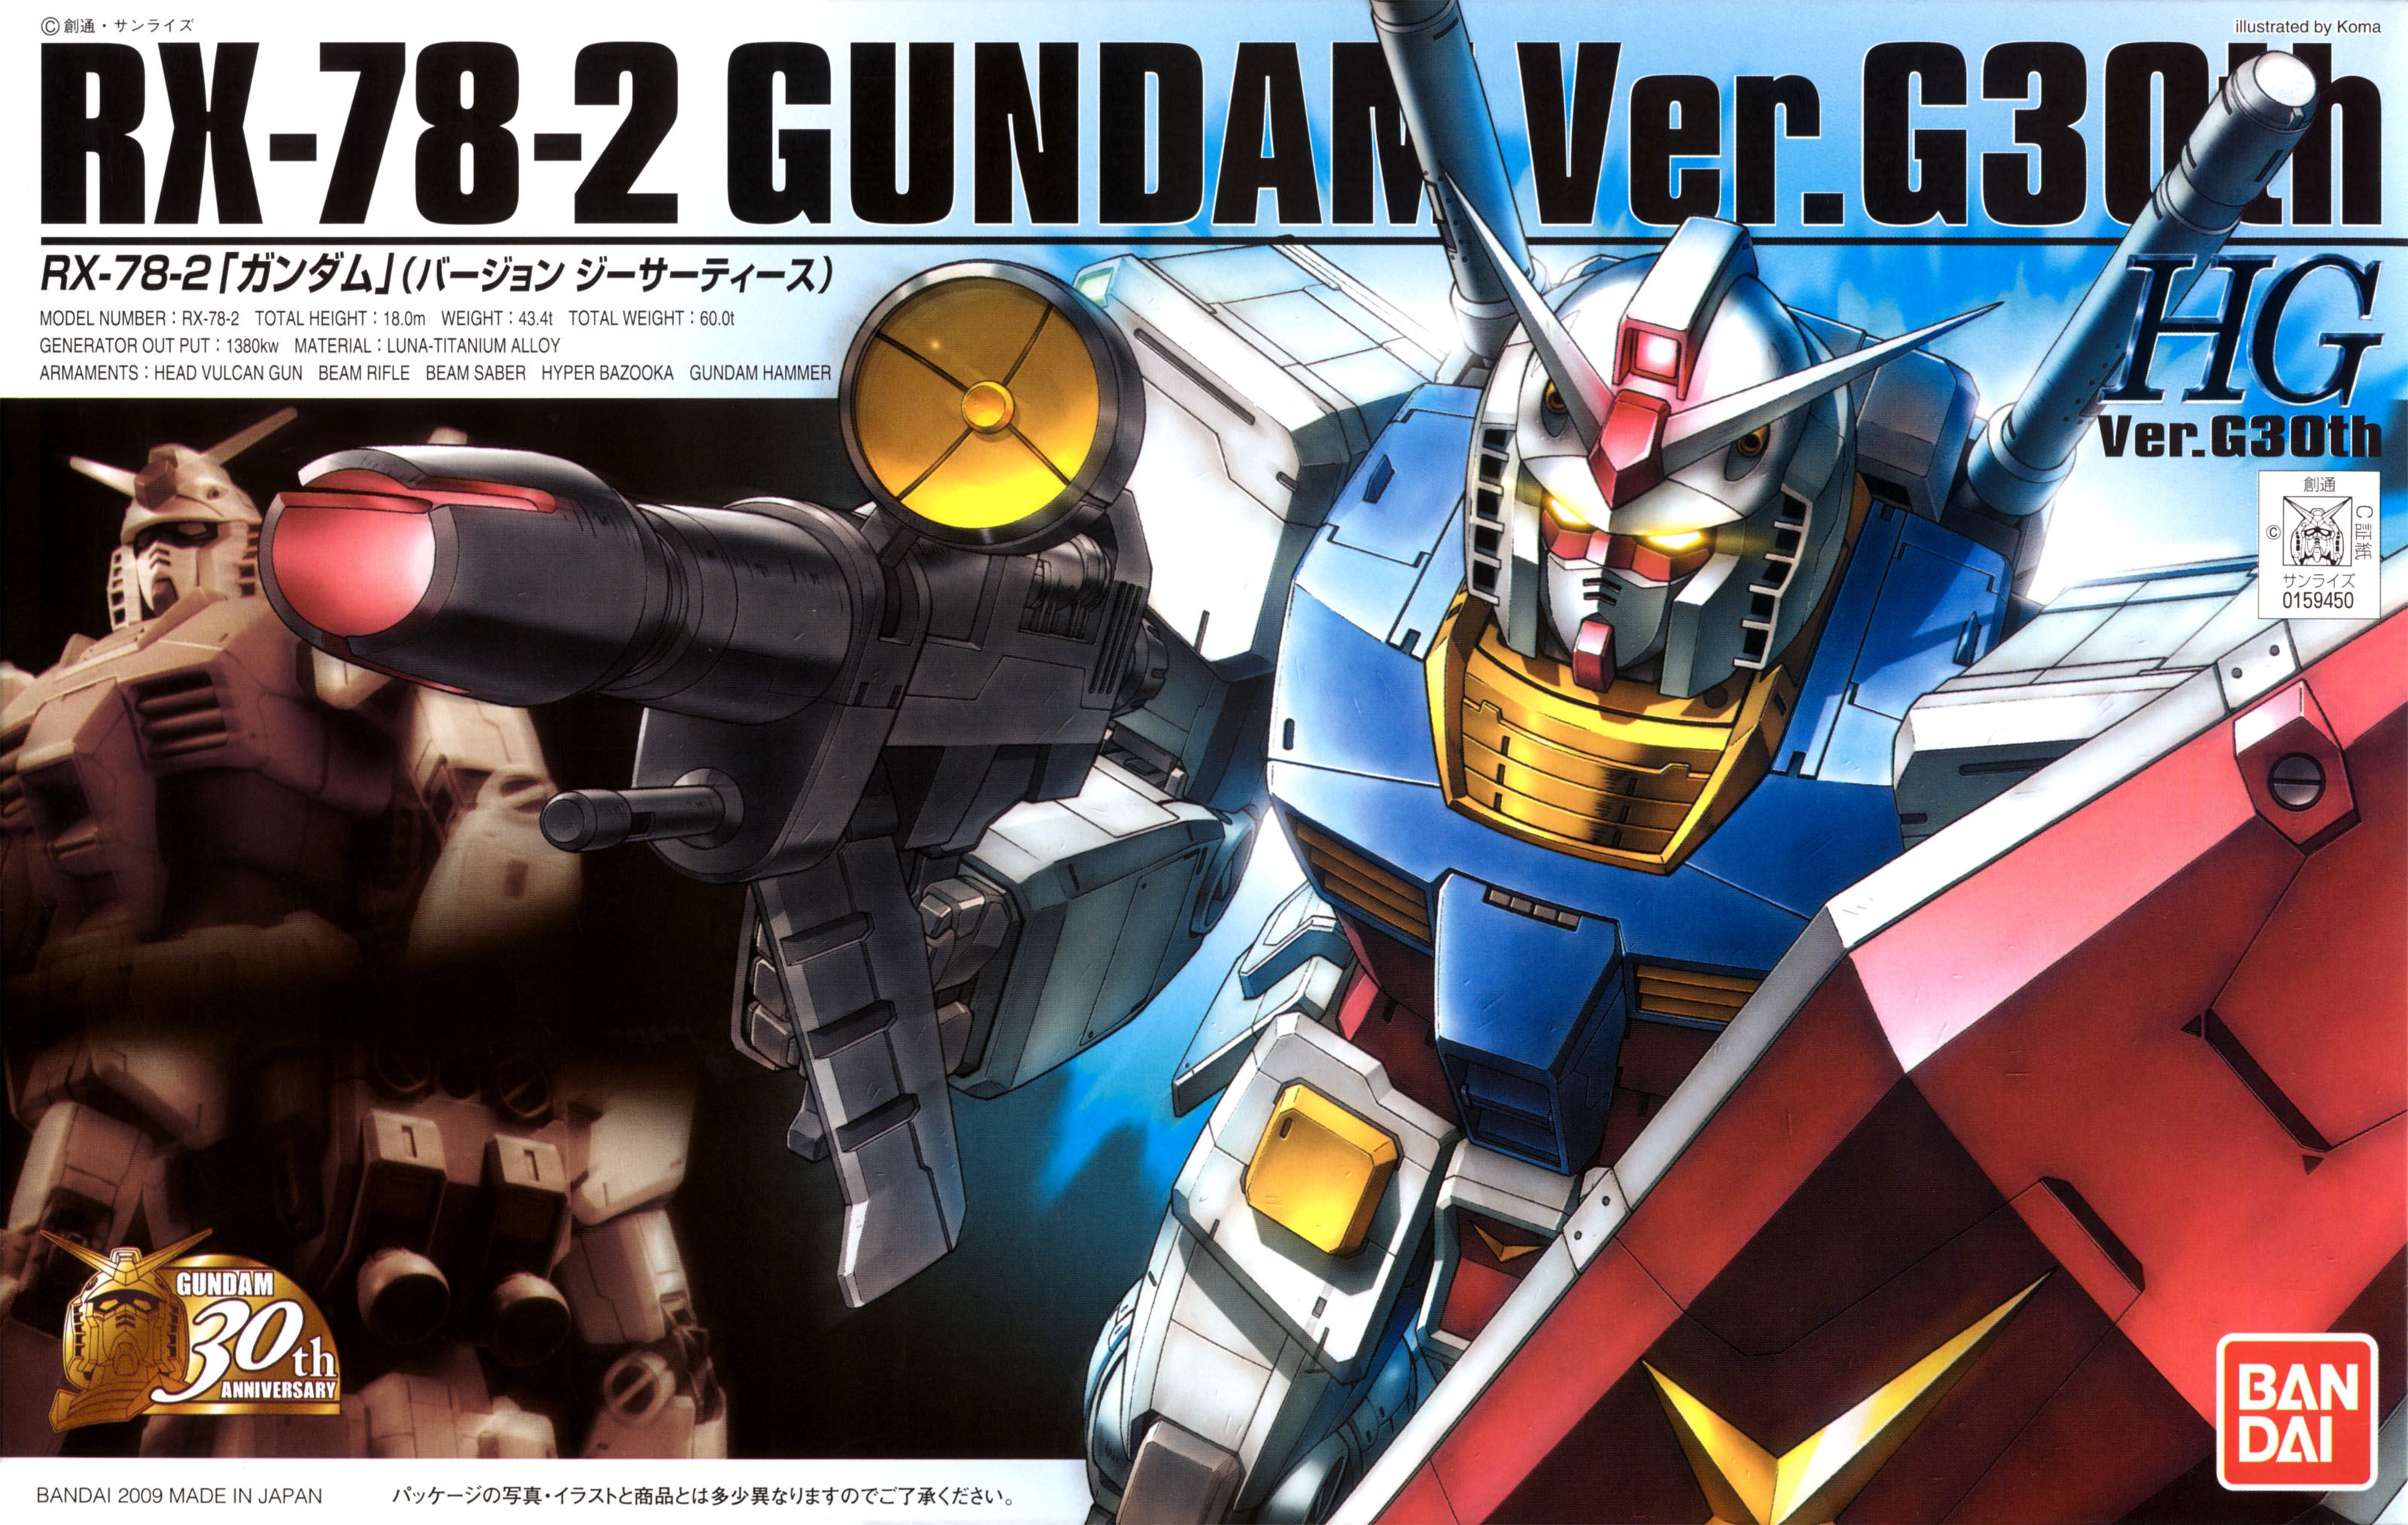 High Grade Ver G30th The Gundam Wiki Fandom